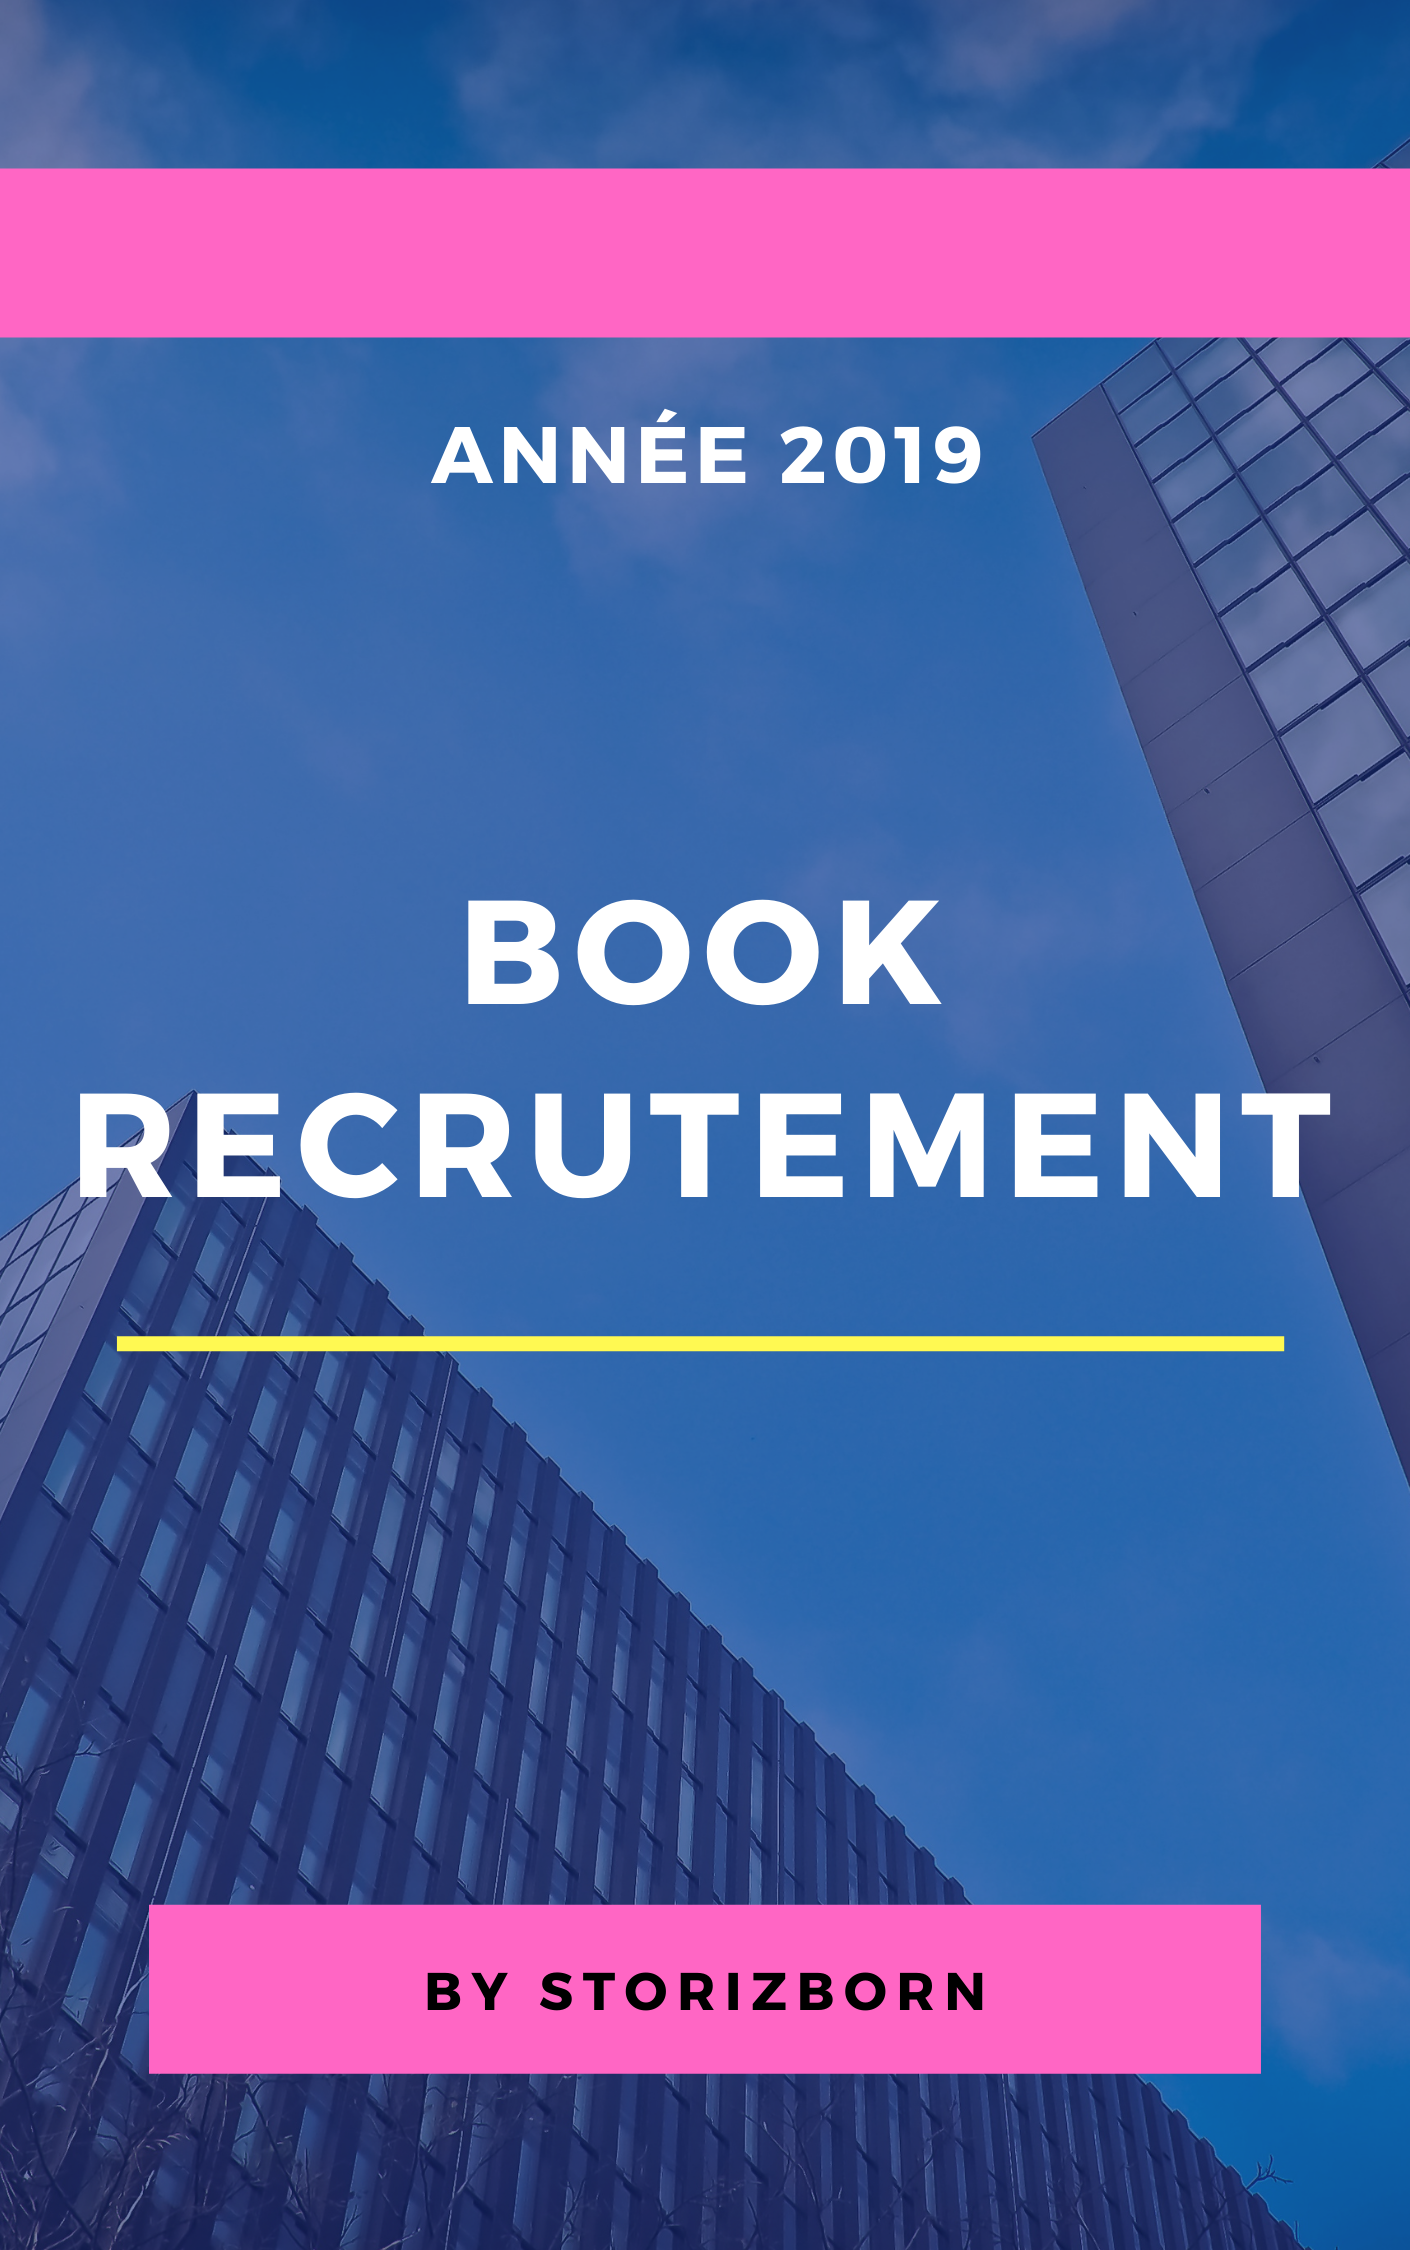 E-book recrutement 2019